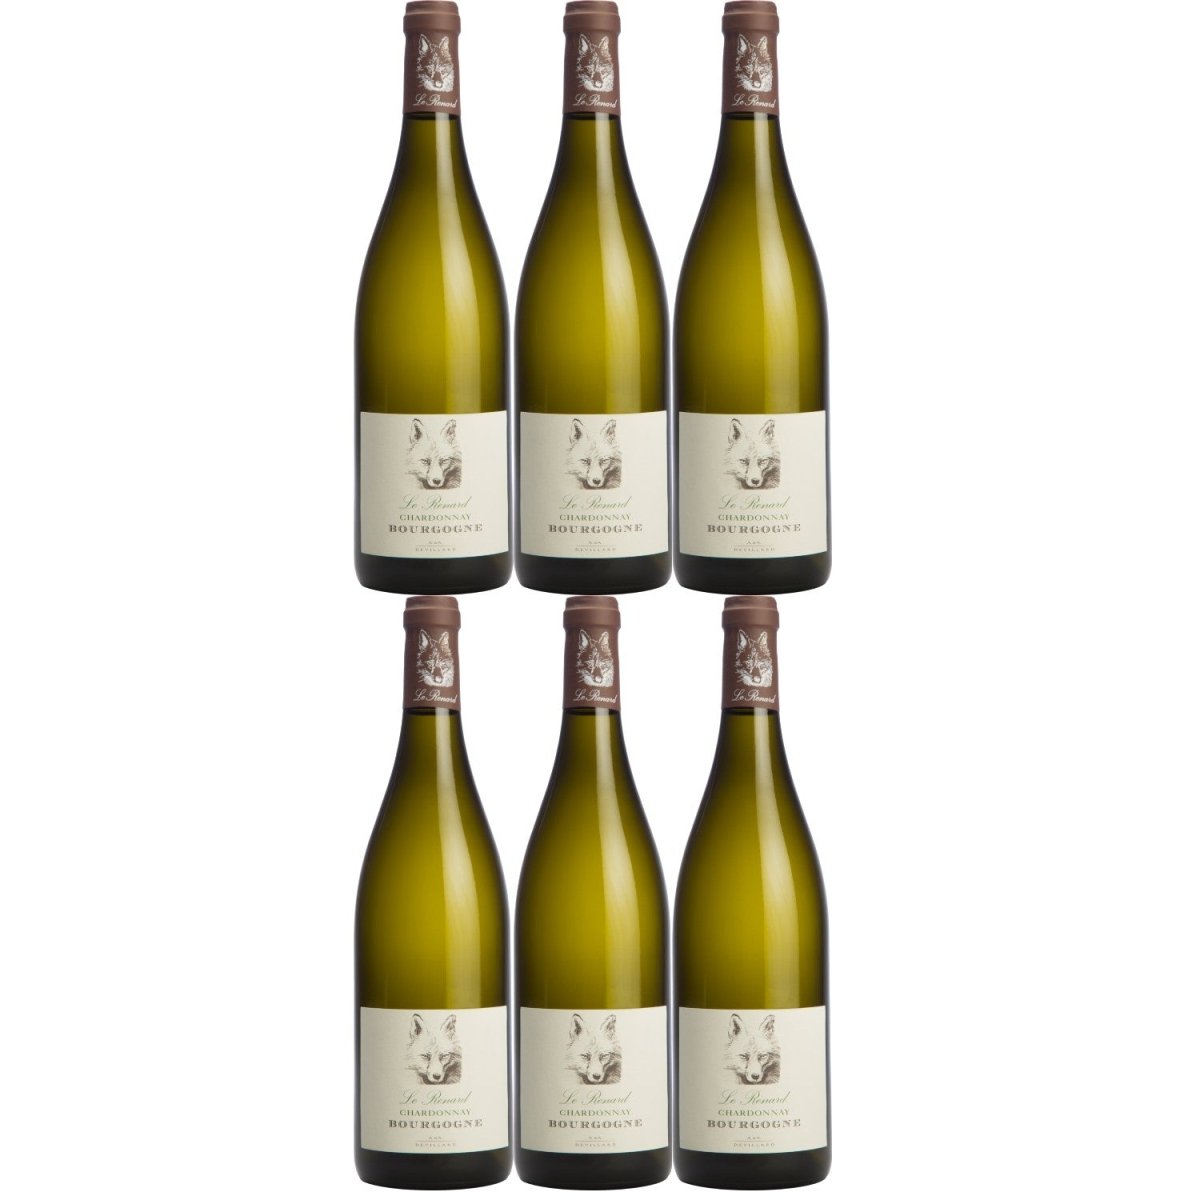 Château de Chamirey Le Renard Bourgogne Chardonnay trocken Weißwein Frankreich (6 x 0.75l) - Versanel -